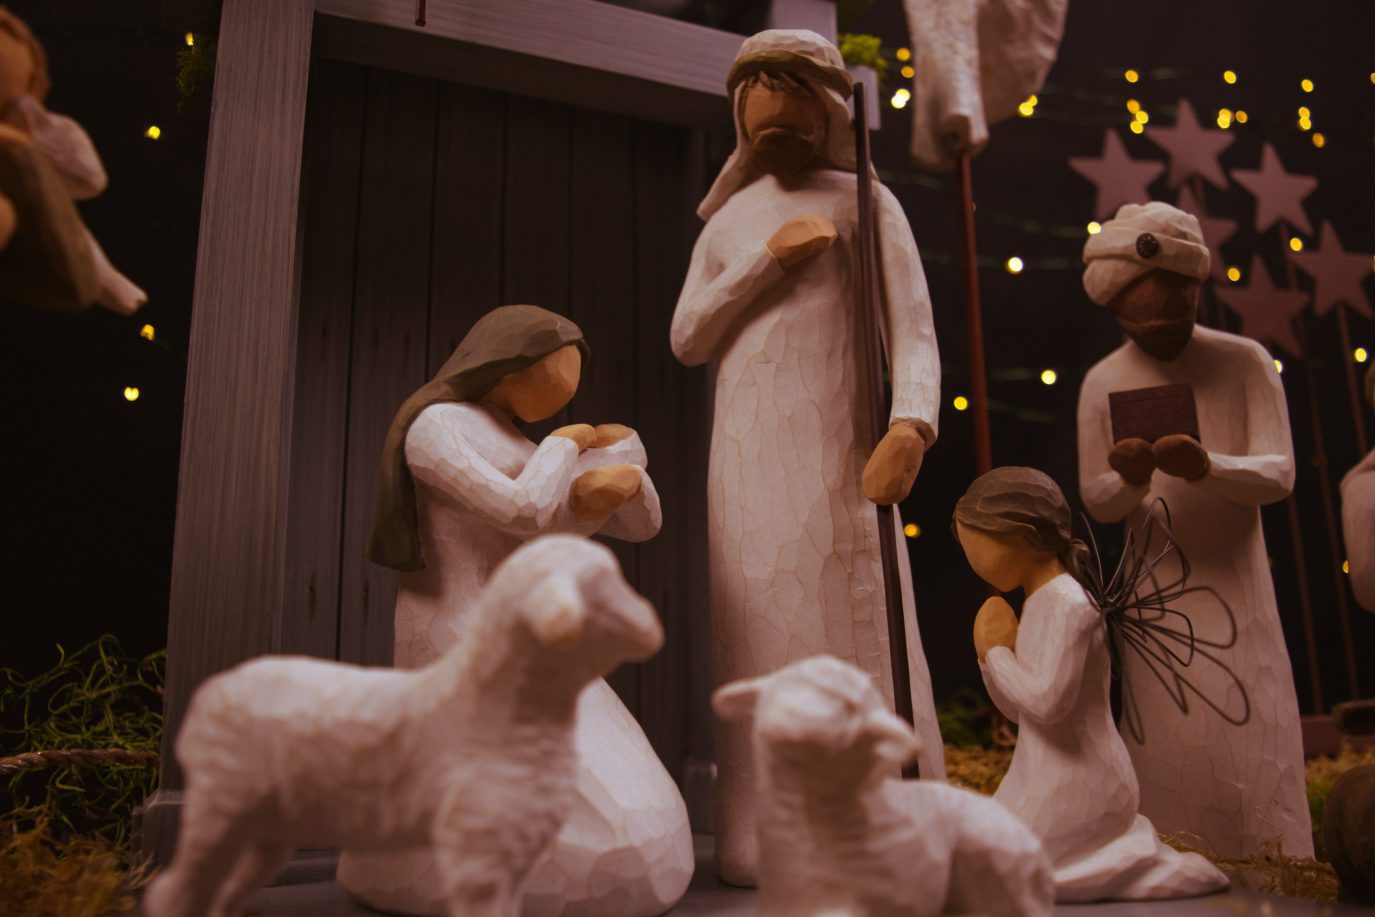 A nativity scene shows Jesus, Mary, Joseph